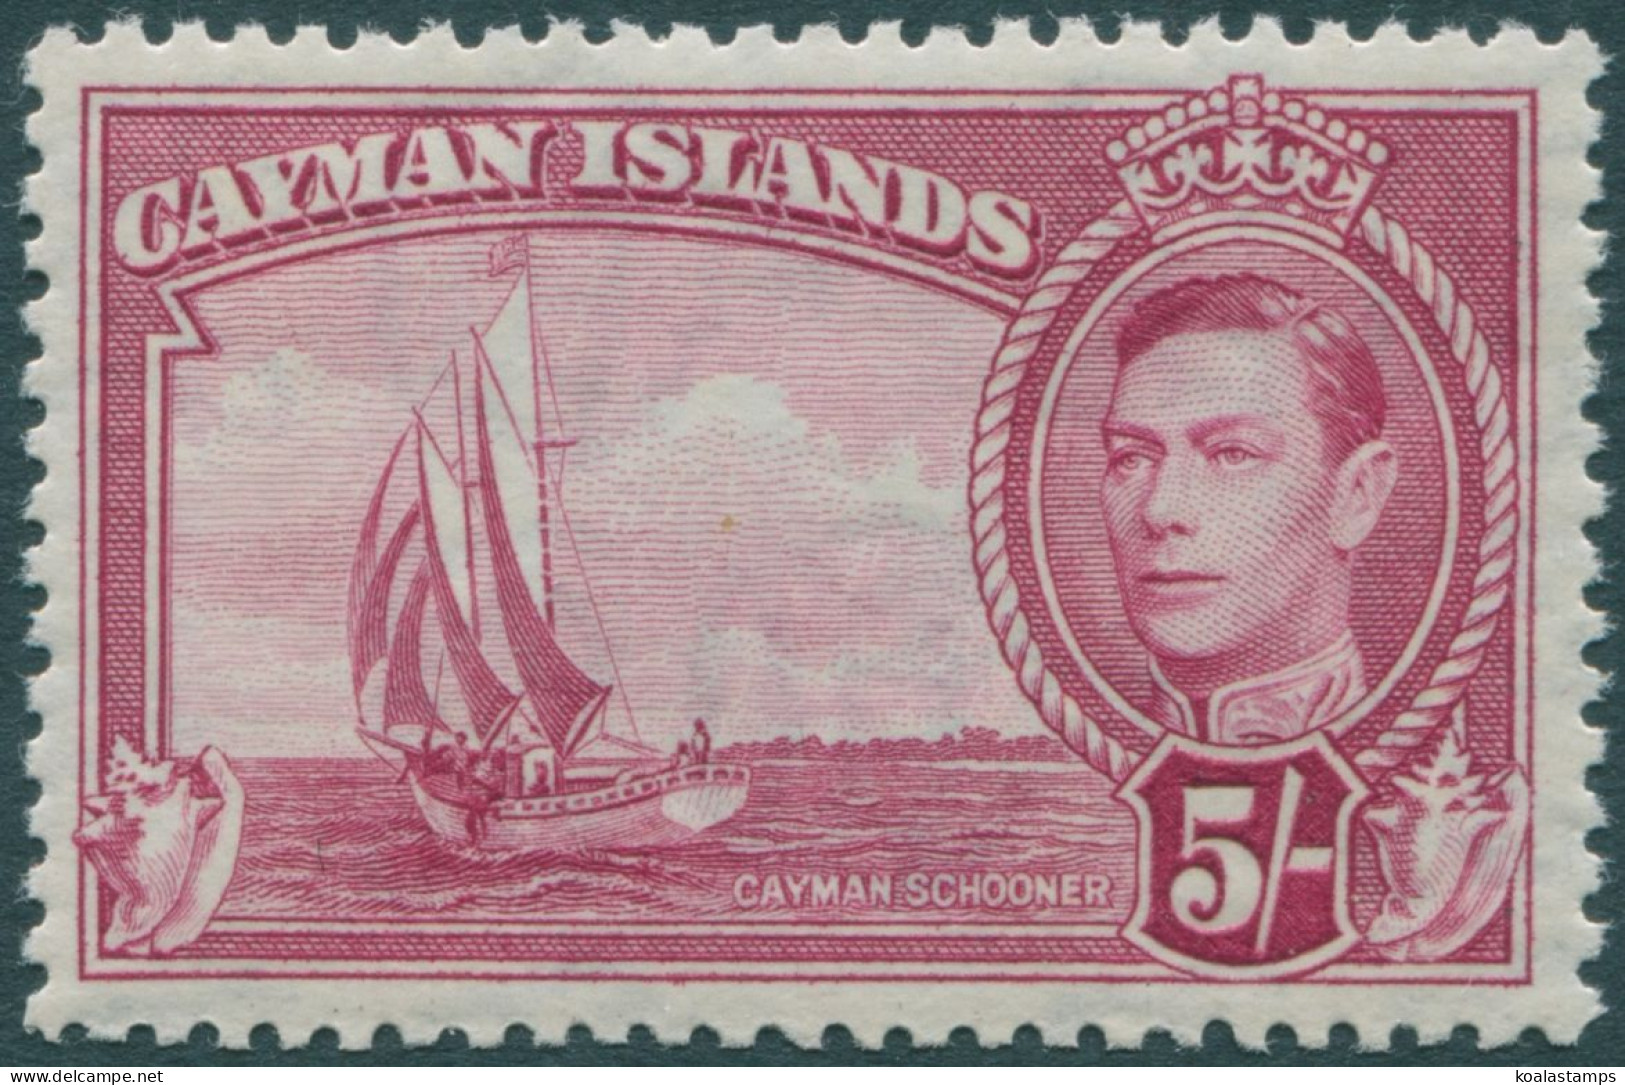 Cayman Islands 1938 SG125 5/- Red KGVI Schooner MNH - Cayman Islands